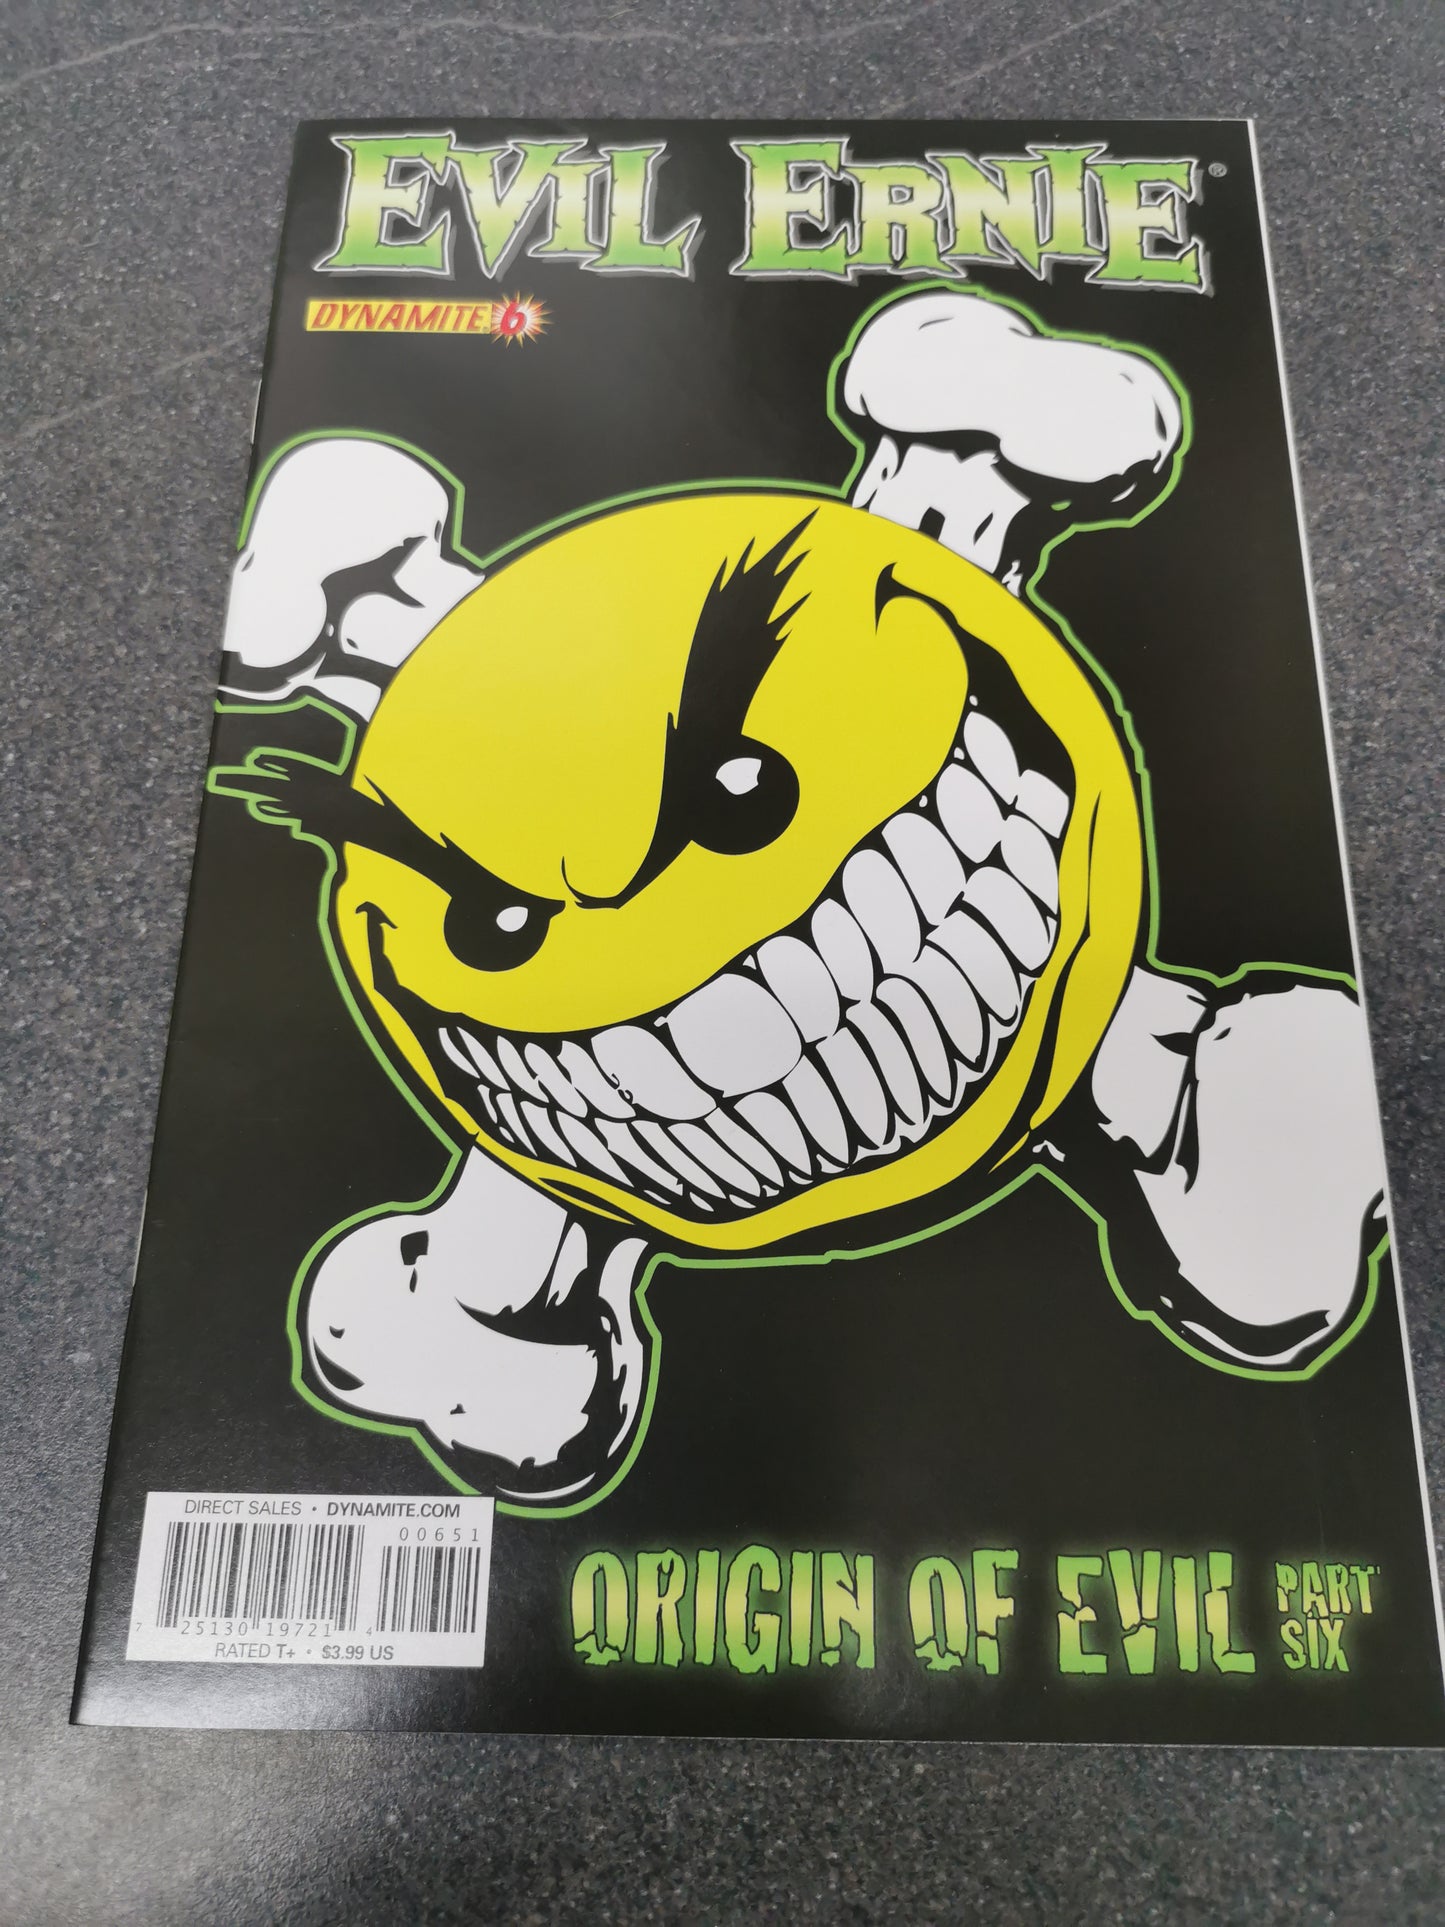 Evil Ernie #6 2013 Dynamite comic